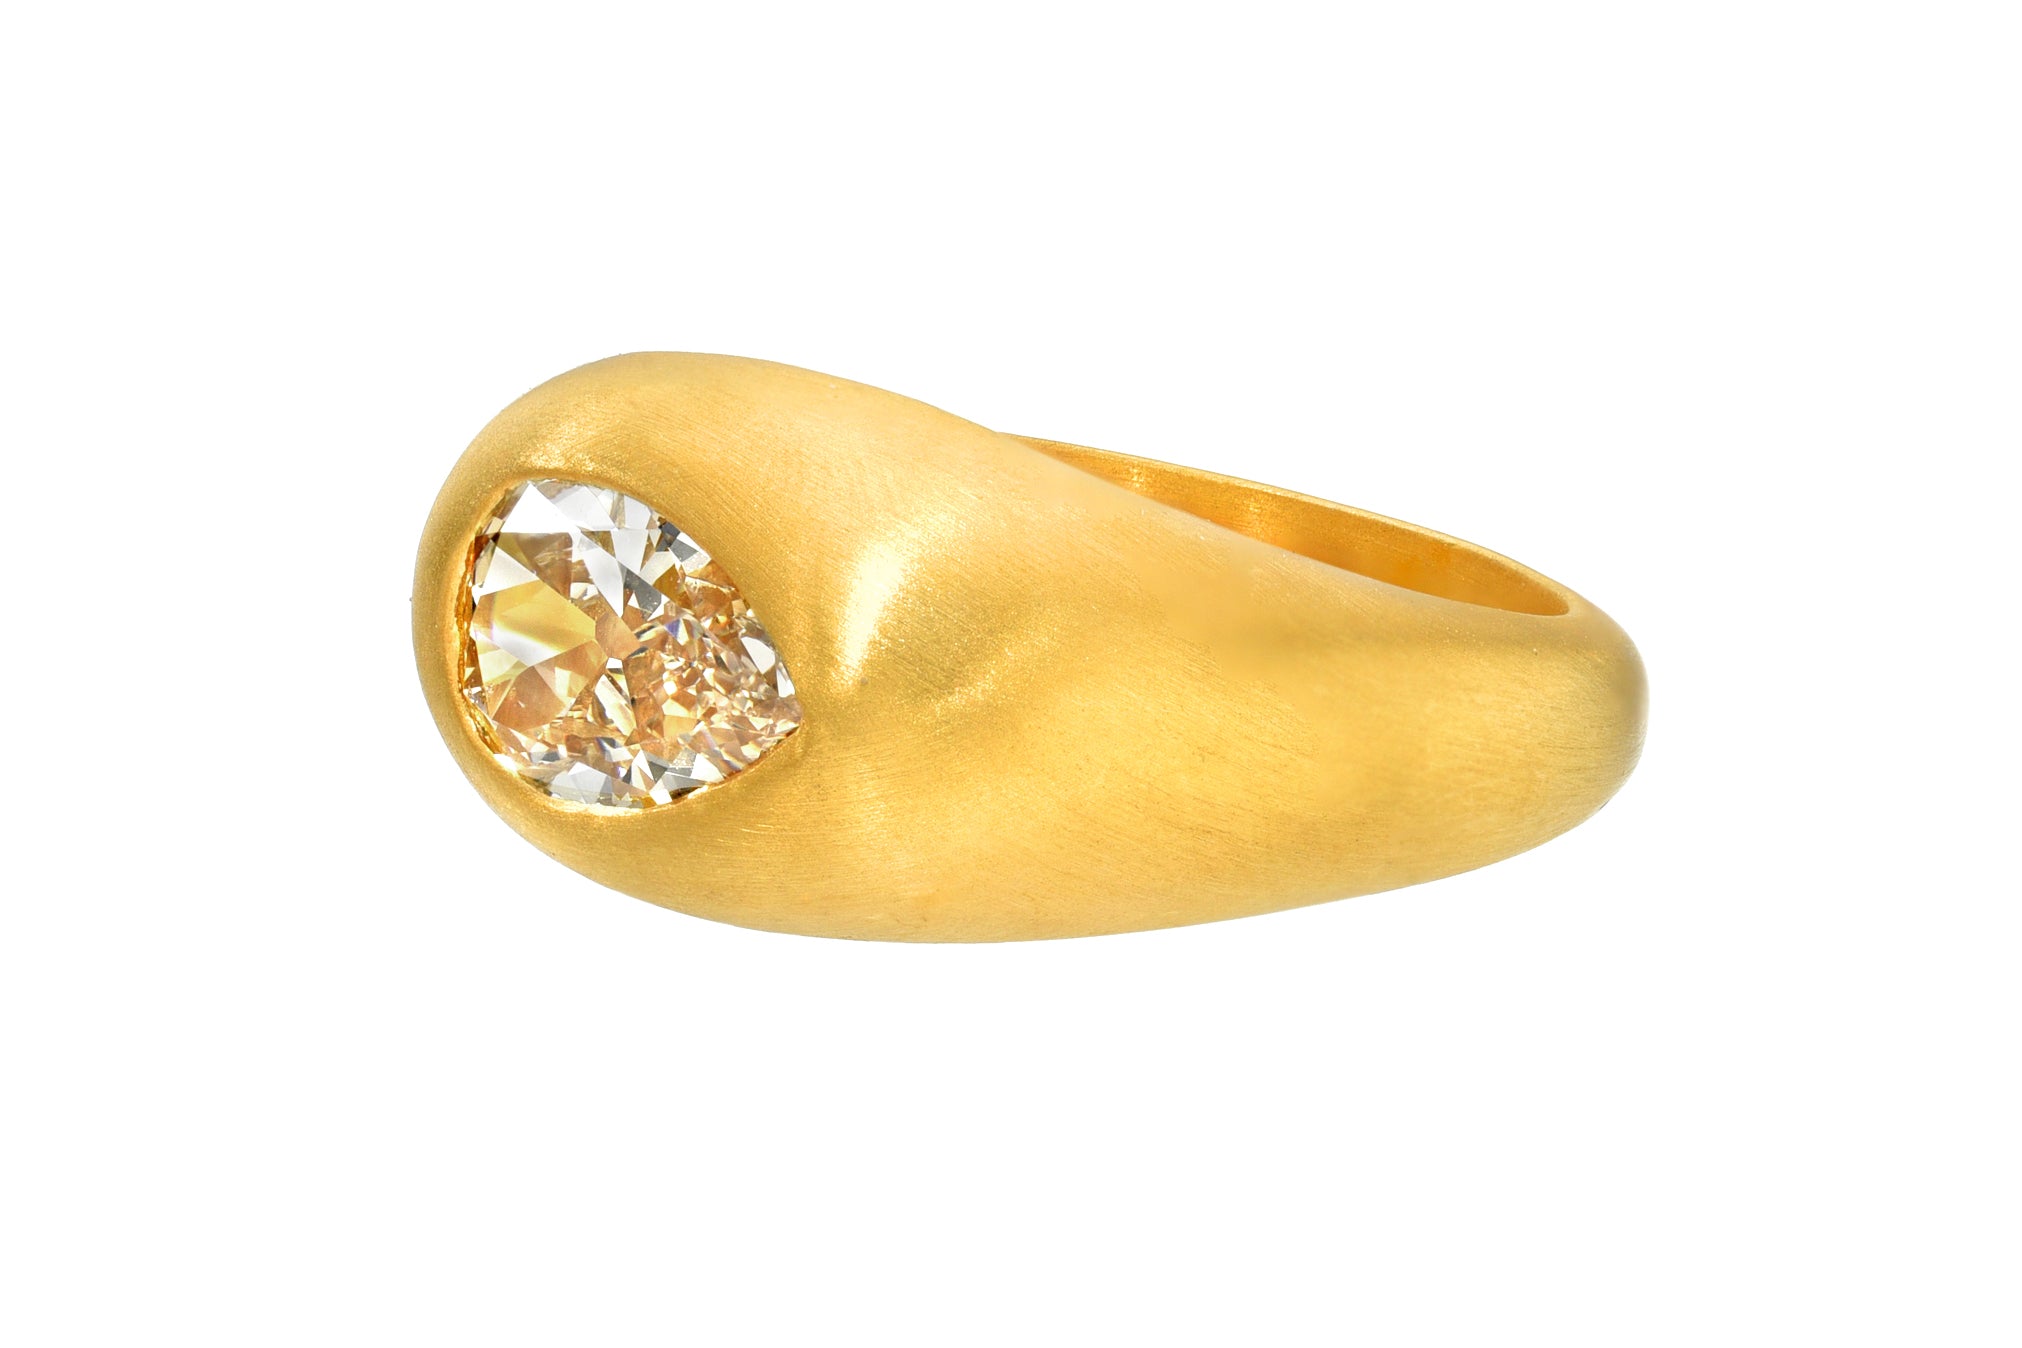 Darius Jewels one of a kind antique Pera diamond gem signet ring